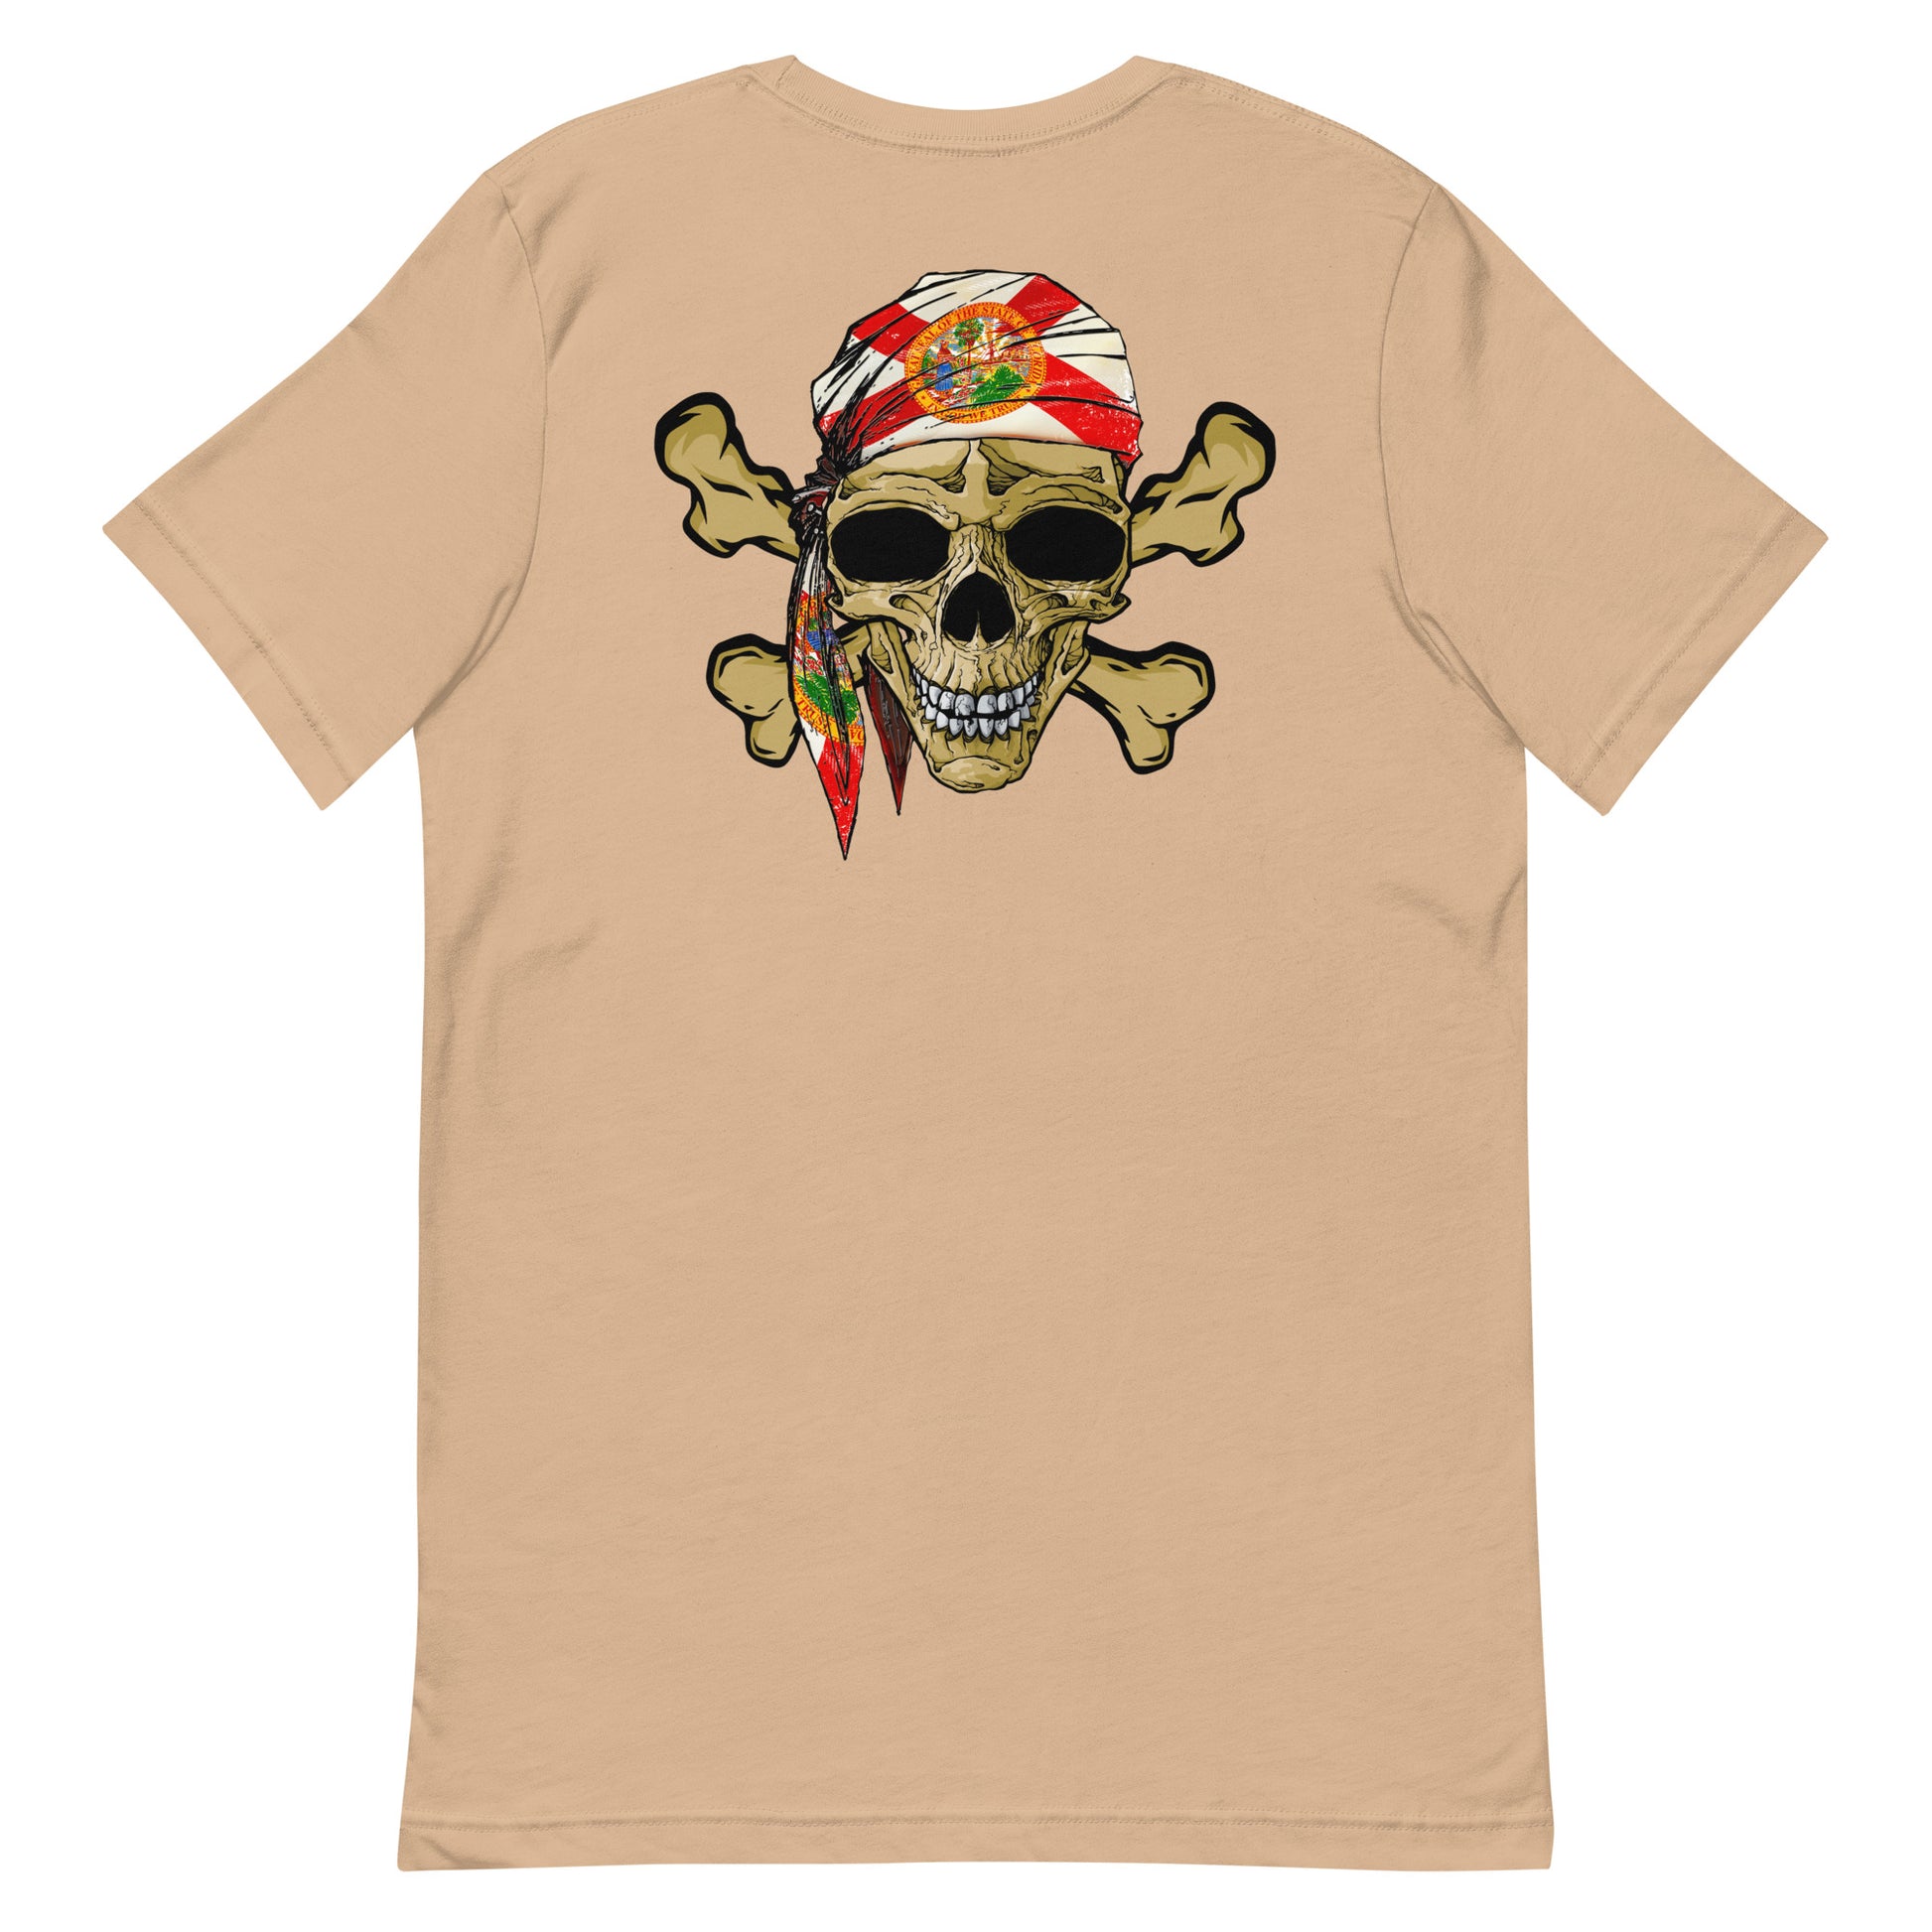 Teeshirtpalace Baseball Face Skeleton Skull T-Shirt